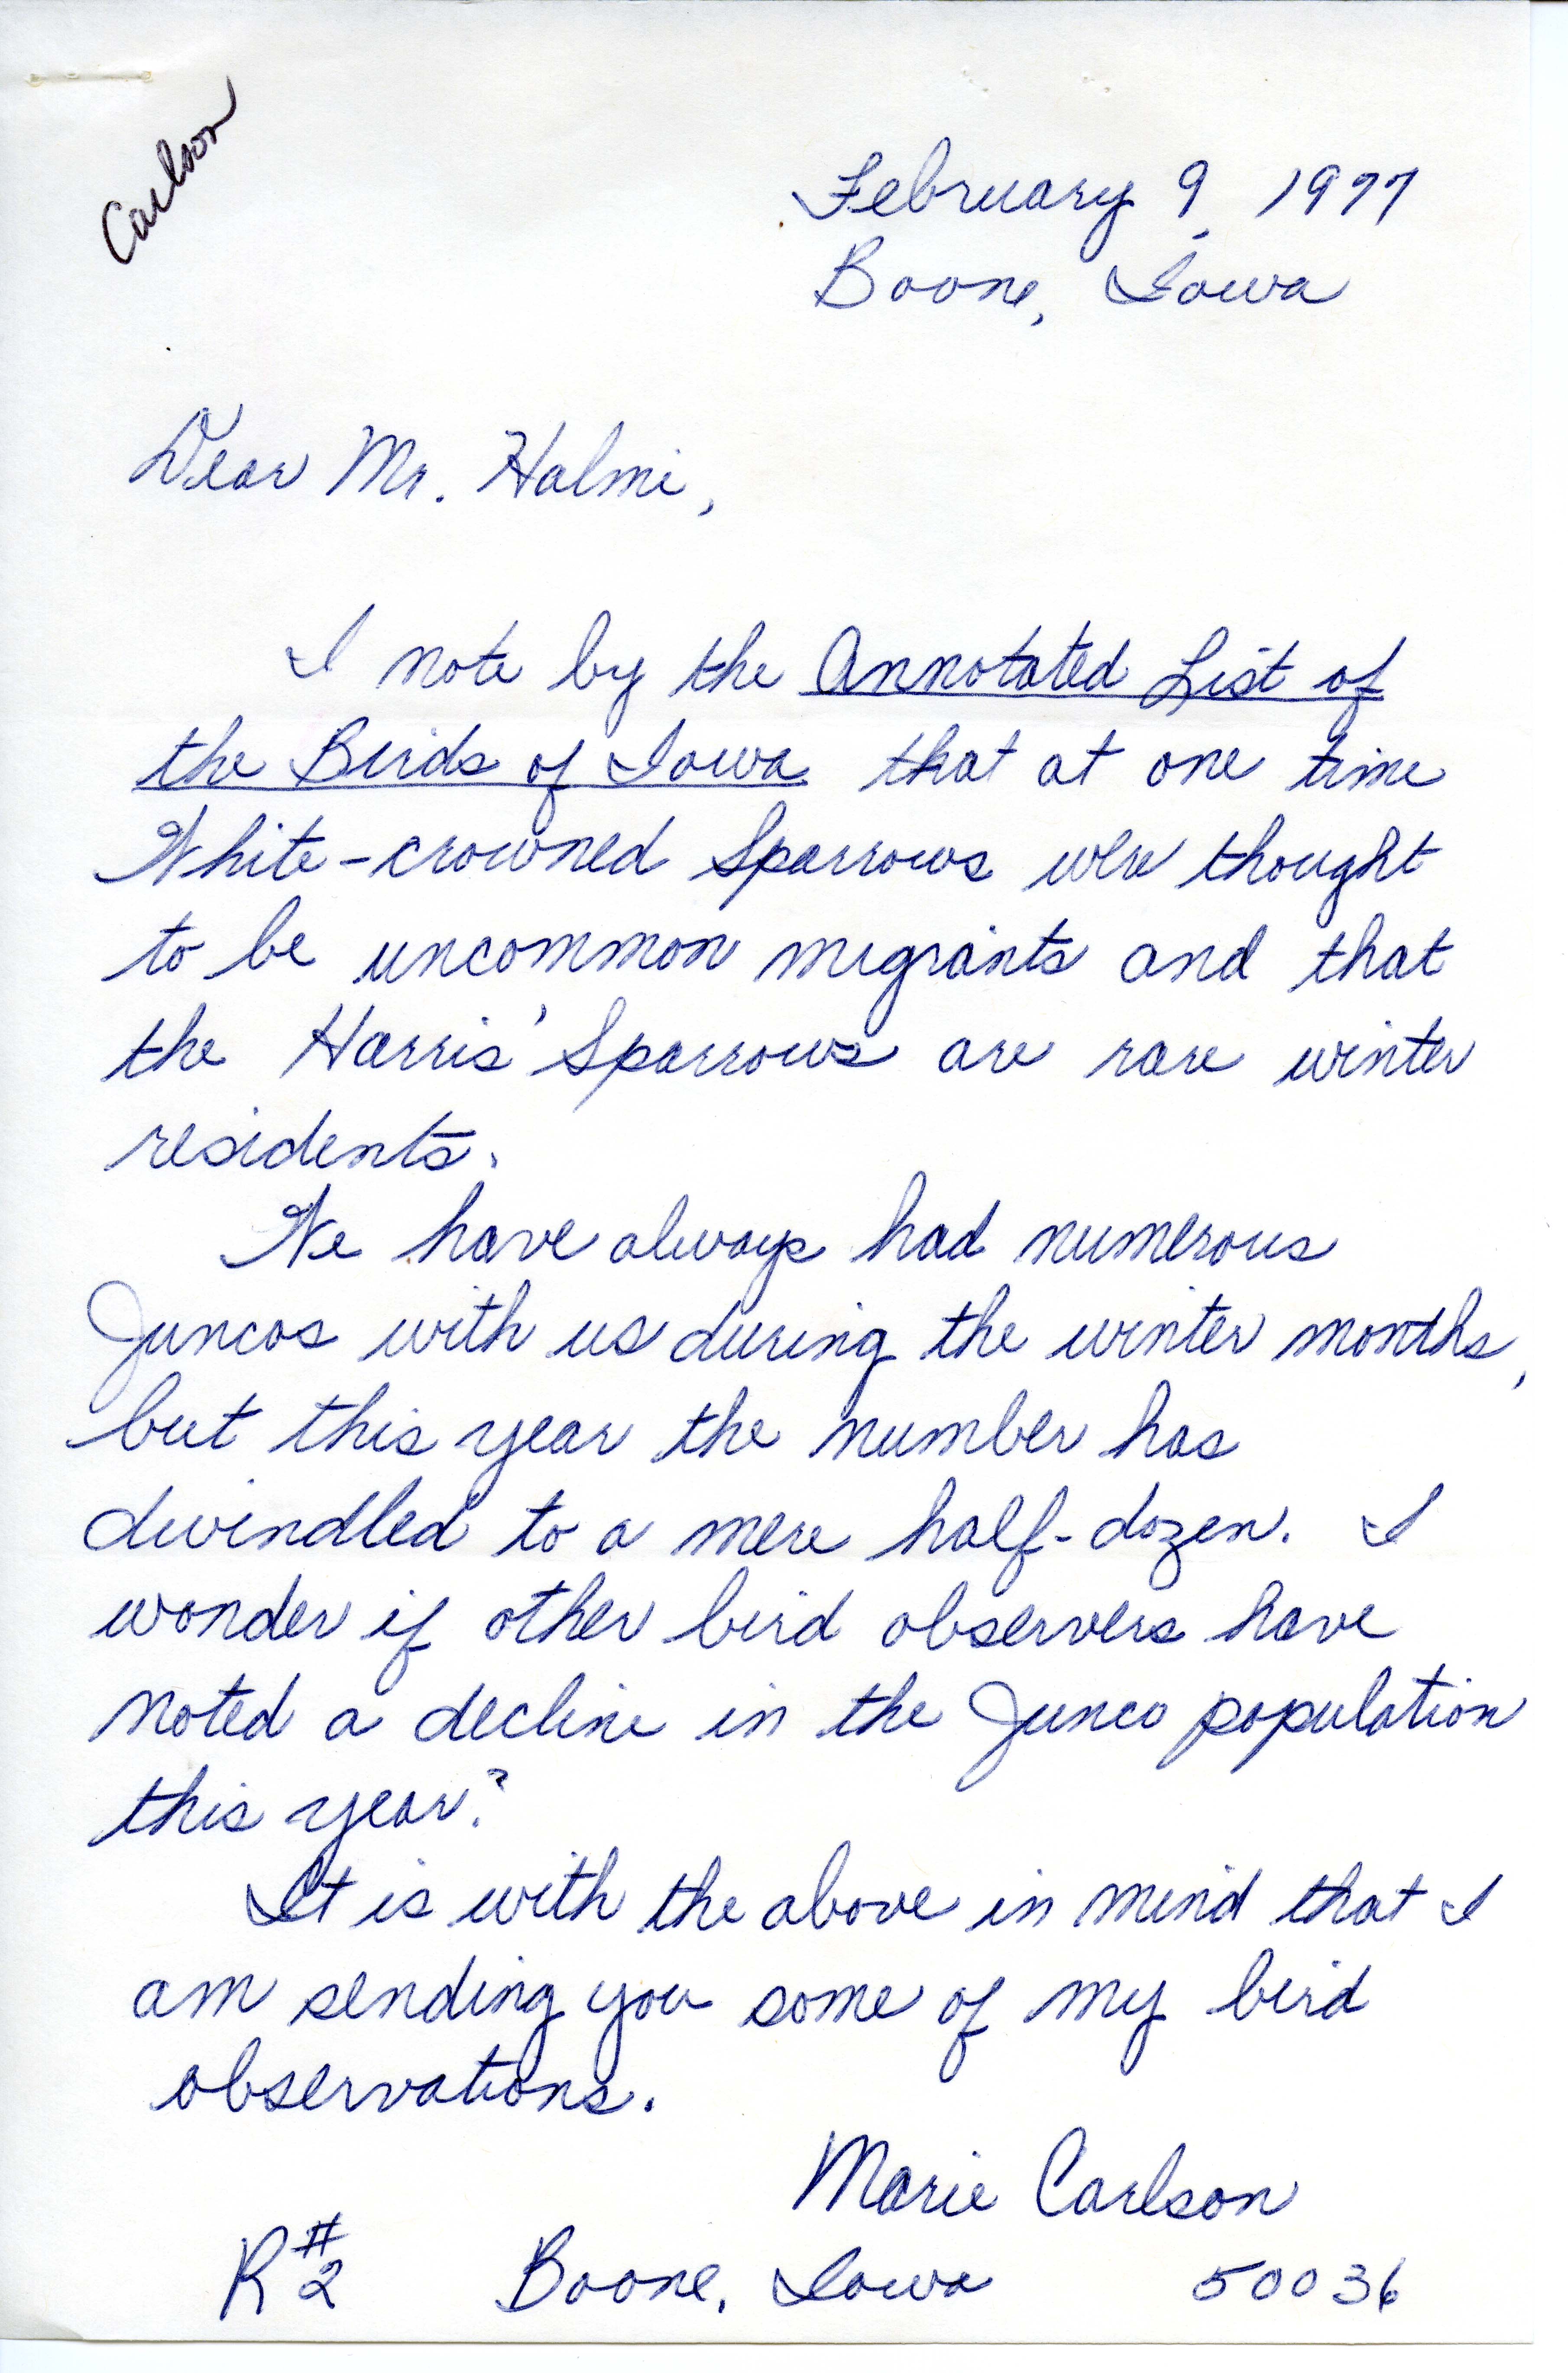 Marie Carlson letter to Nicholas S. Halmi regarding bird sightings, February 9, 1977